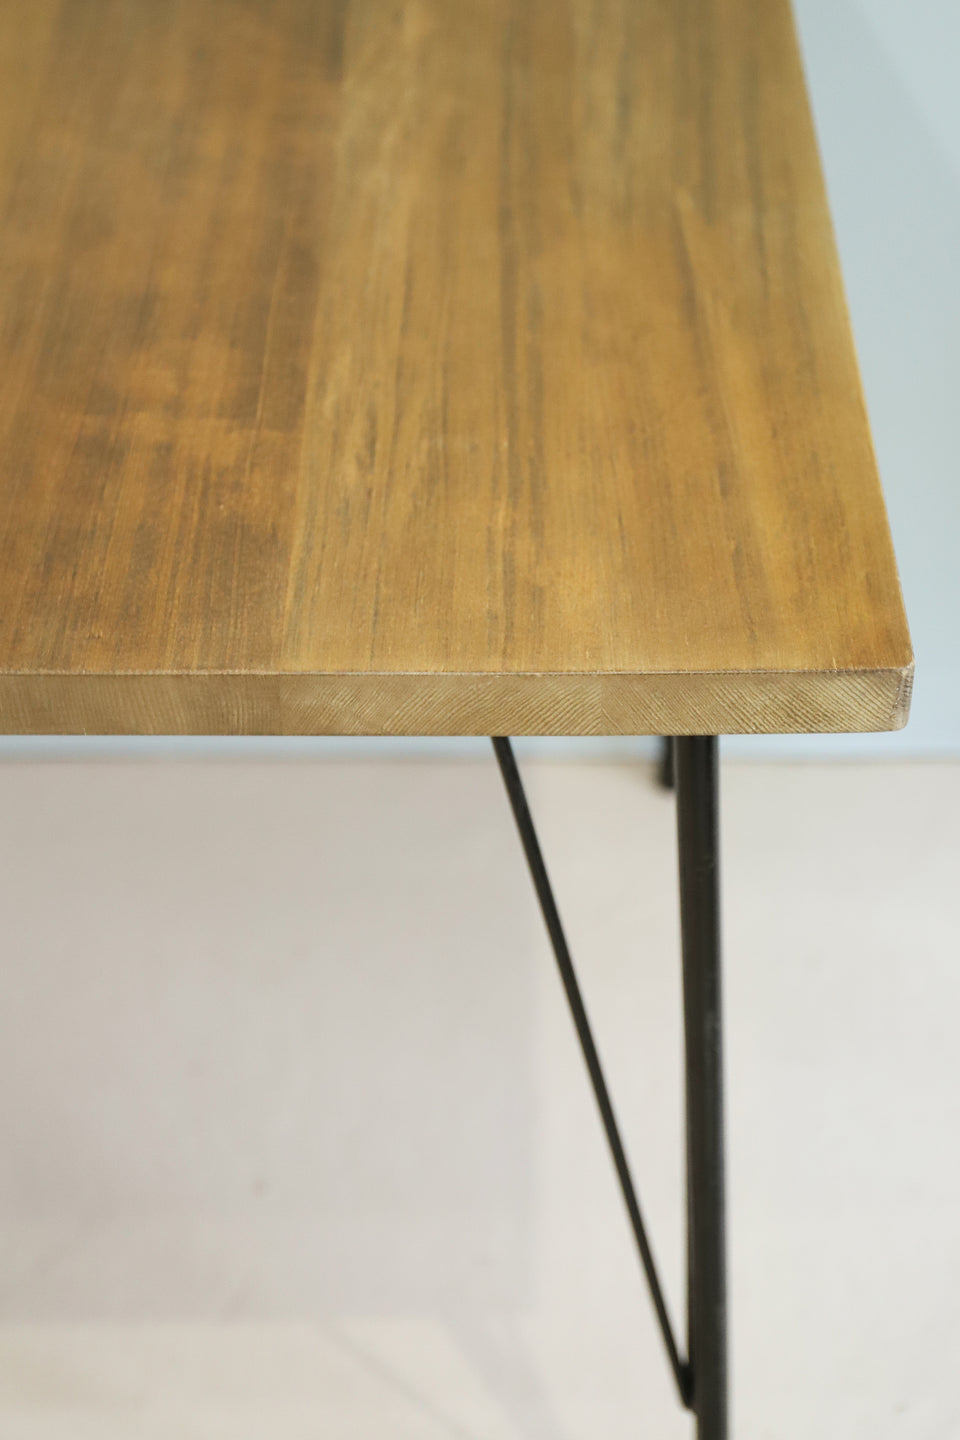 Old Wood and Iron Leg Remake Table/古材 リメイクテーブル 鉄脚 デスク 机